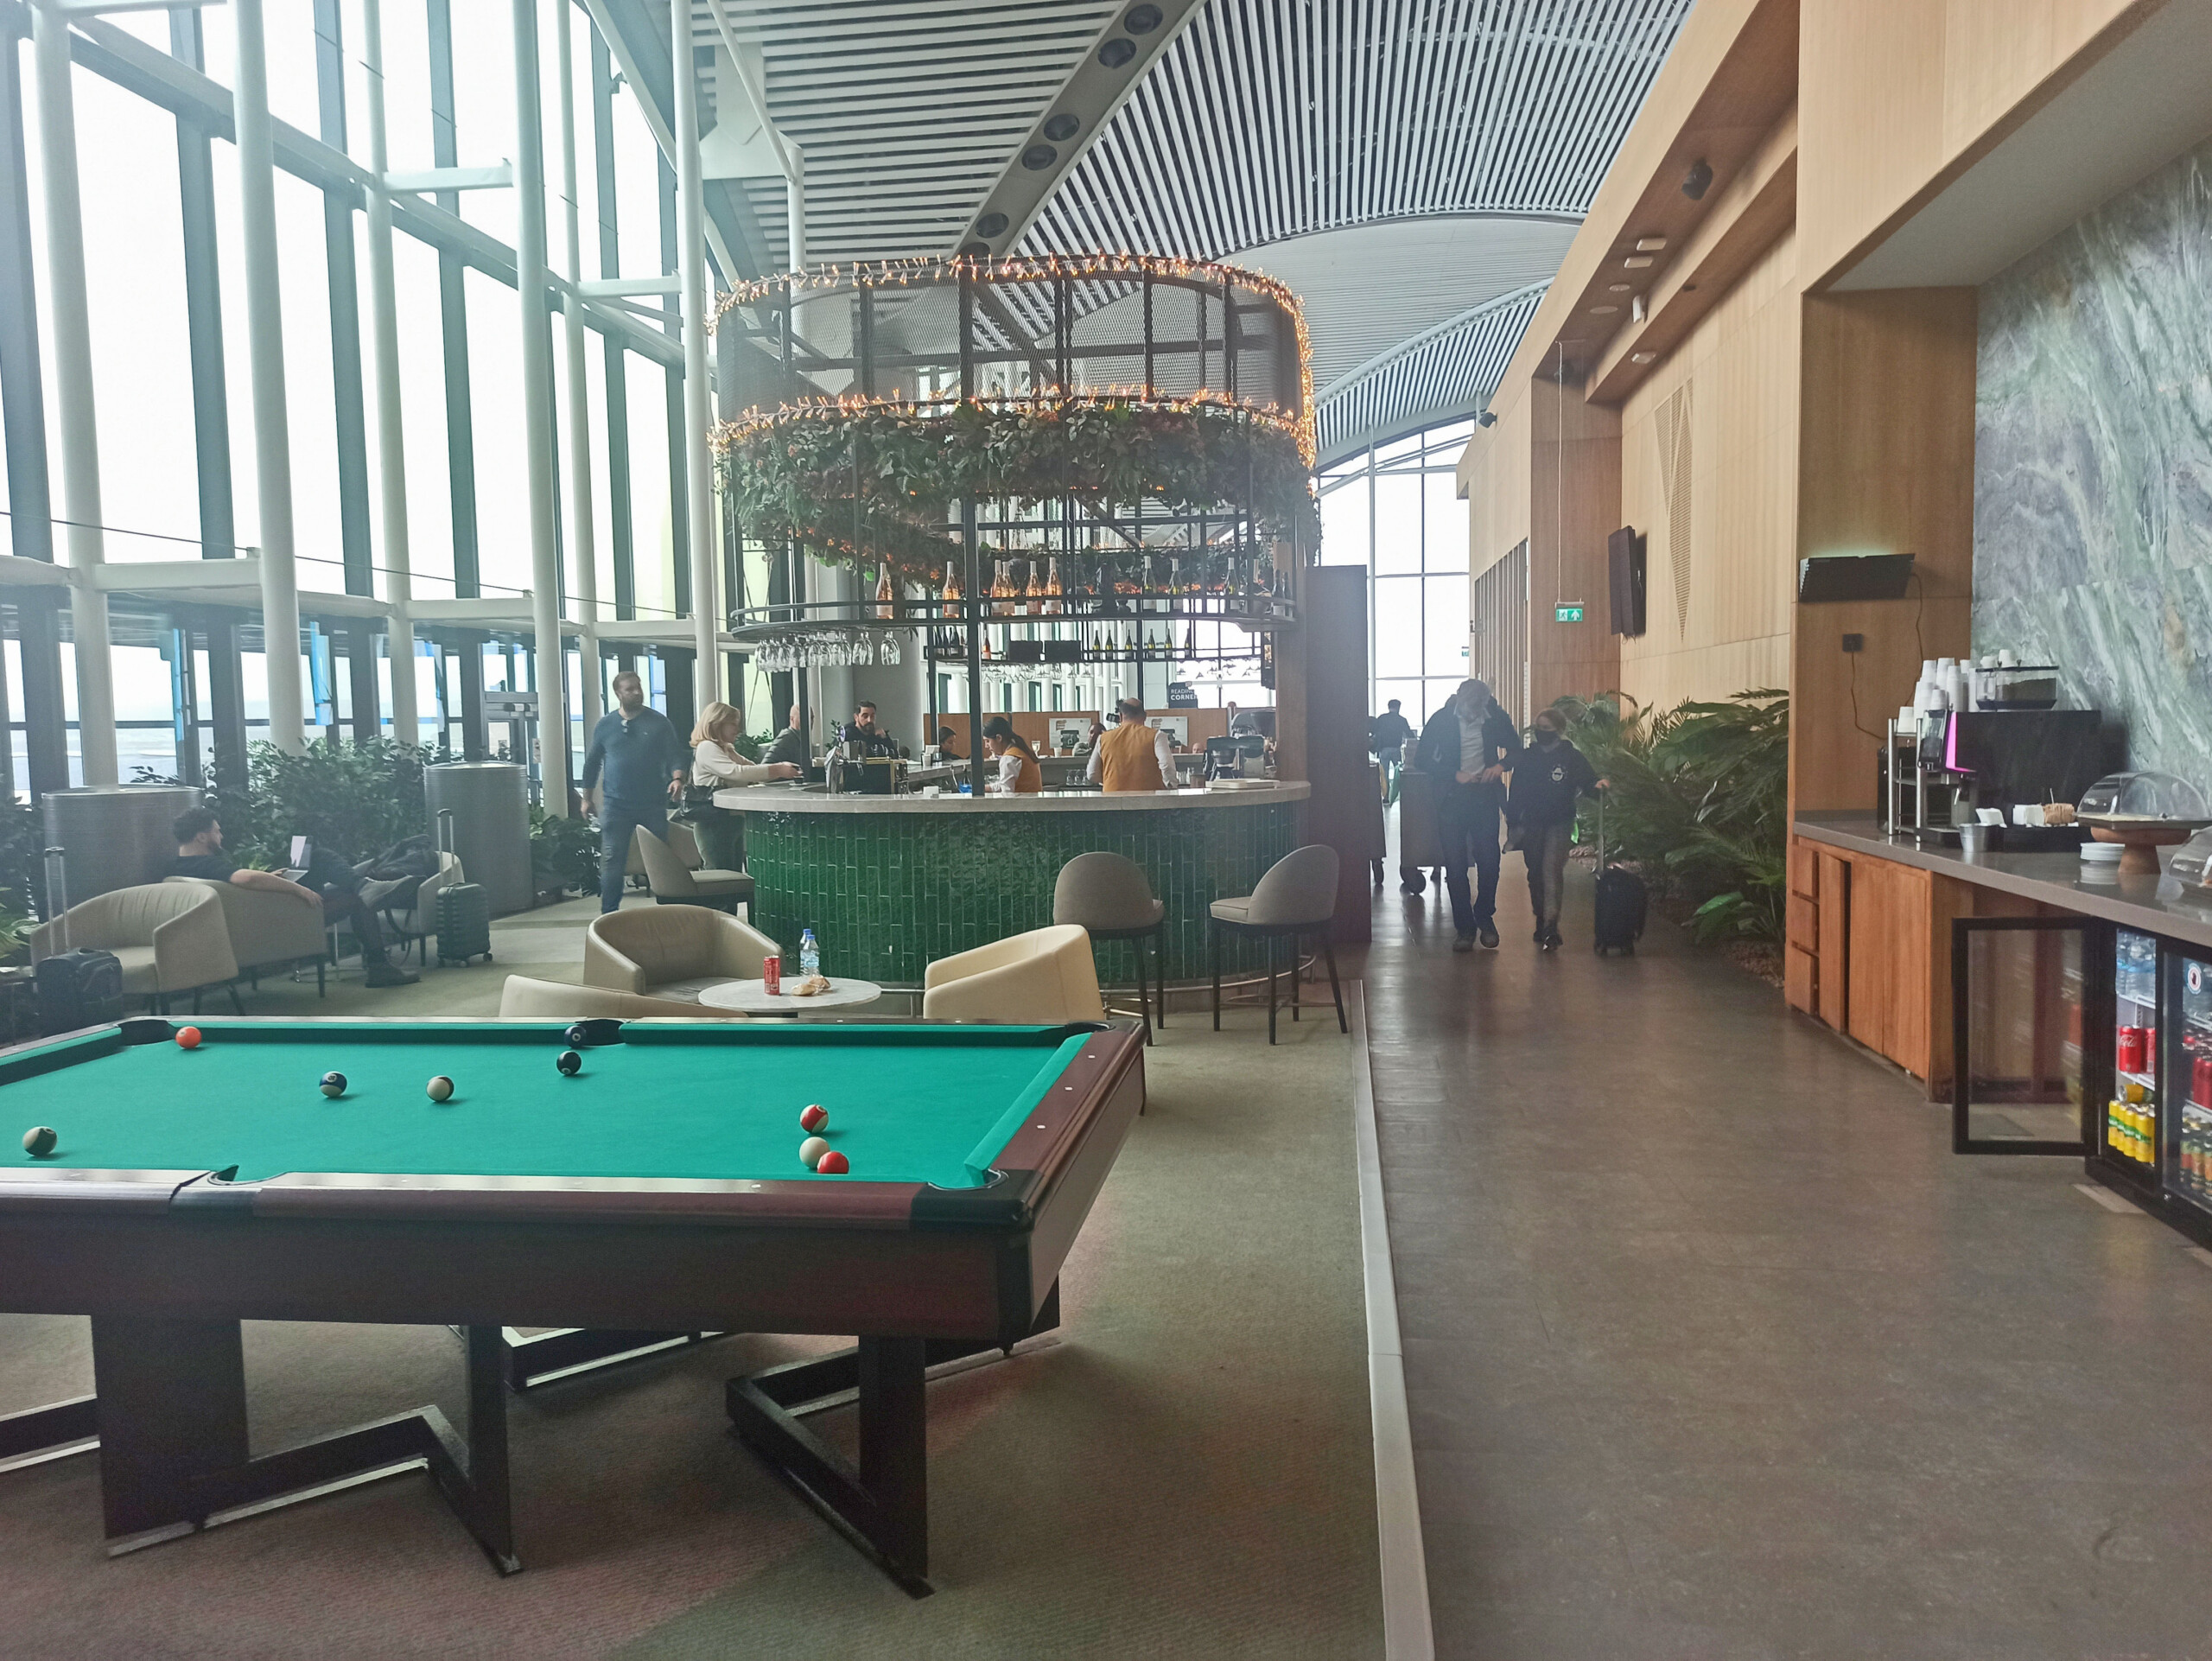 iGA Lounge Pool Table